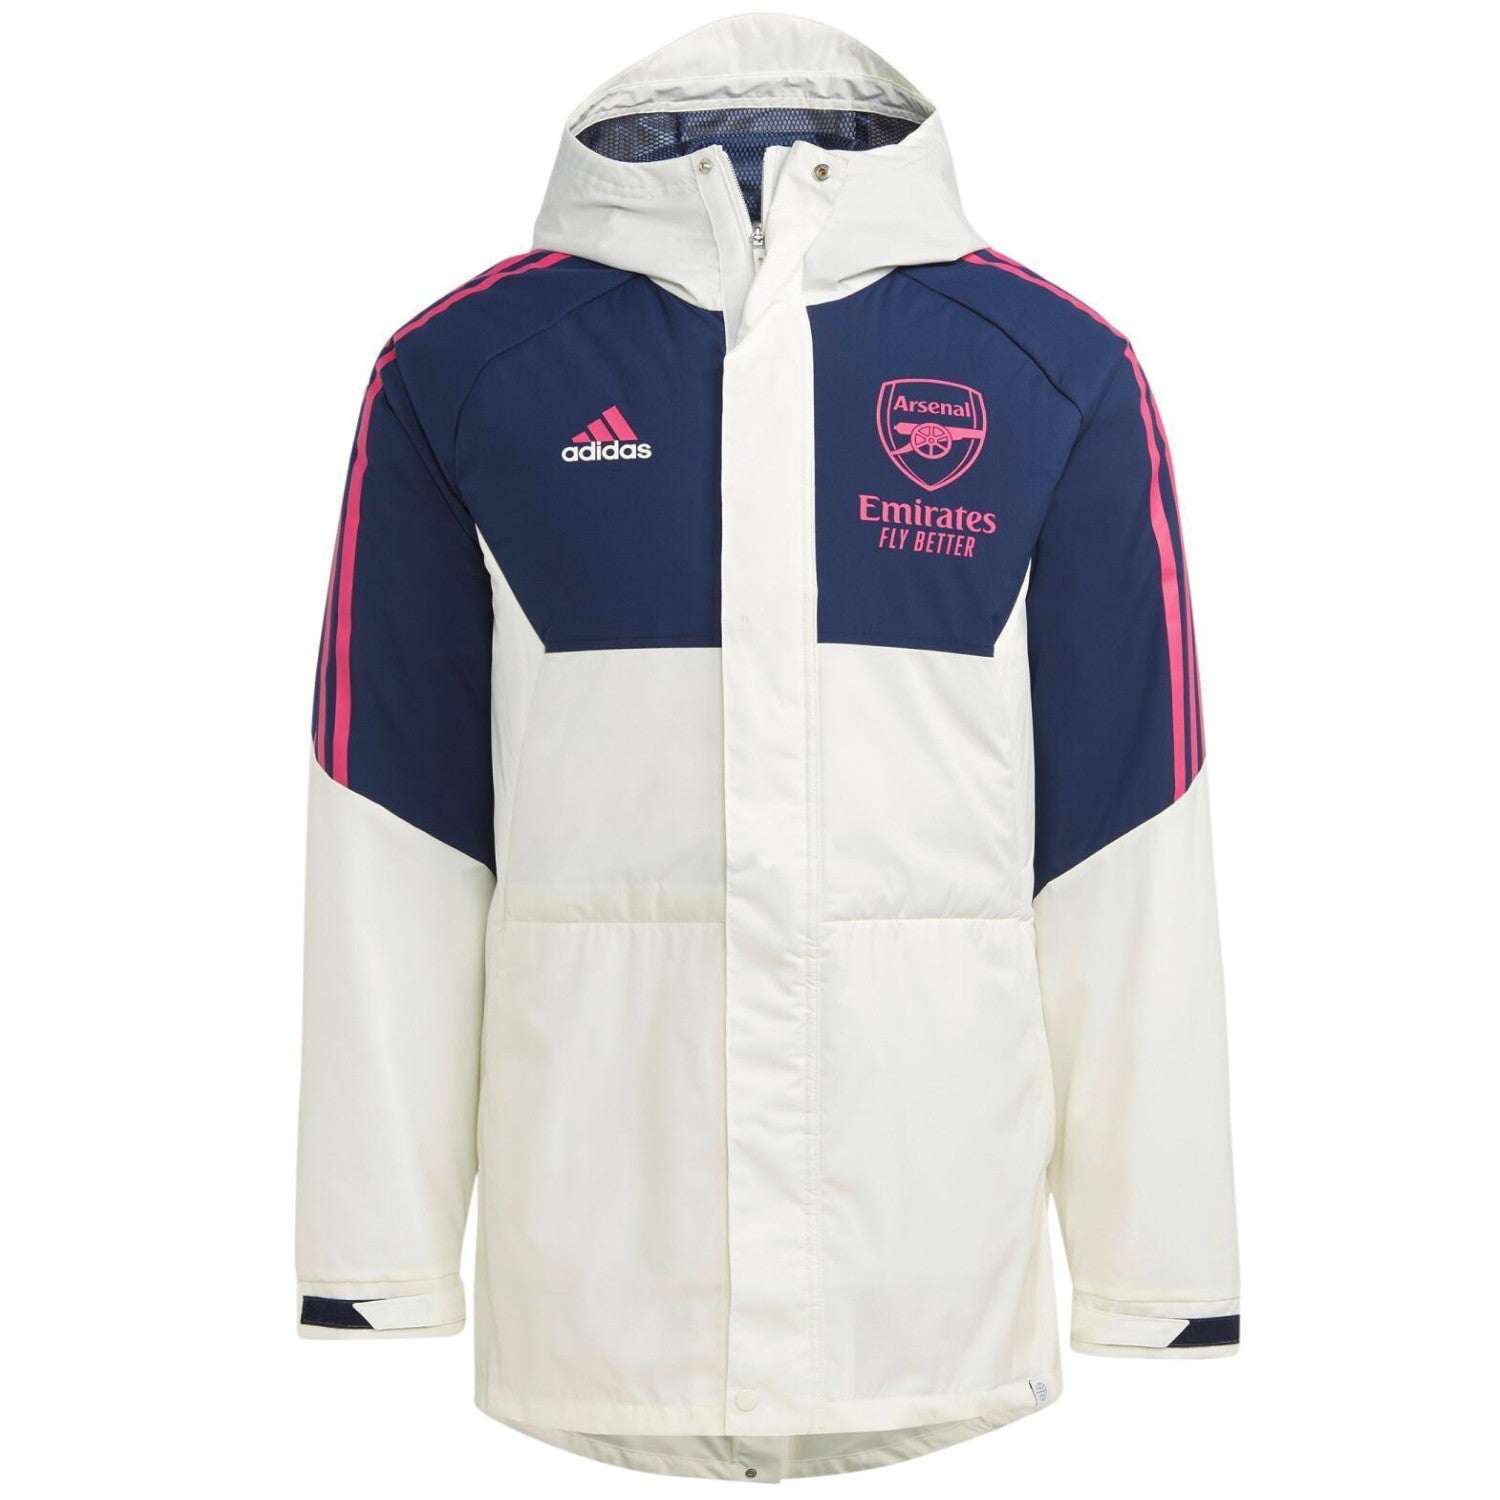 Arsenal FC Soccer parka down jacket white/blue - Adidas – SoccerTracksuits.com